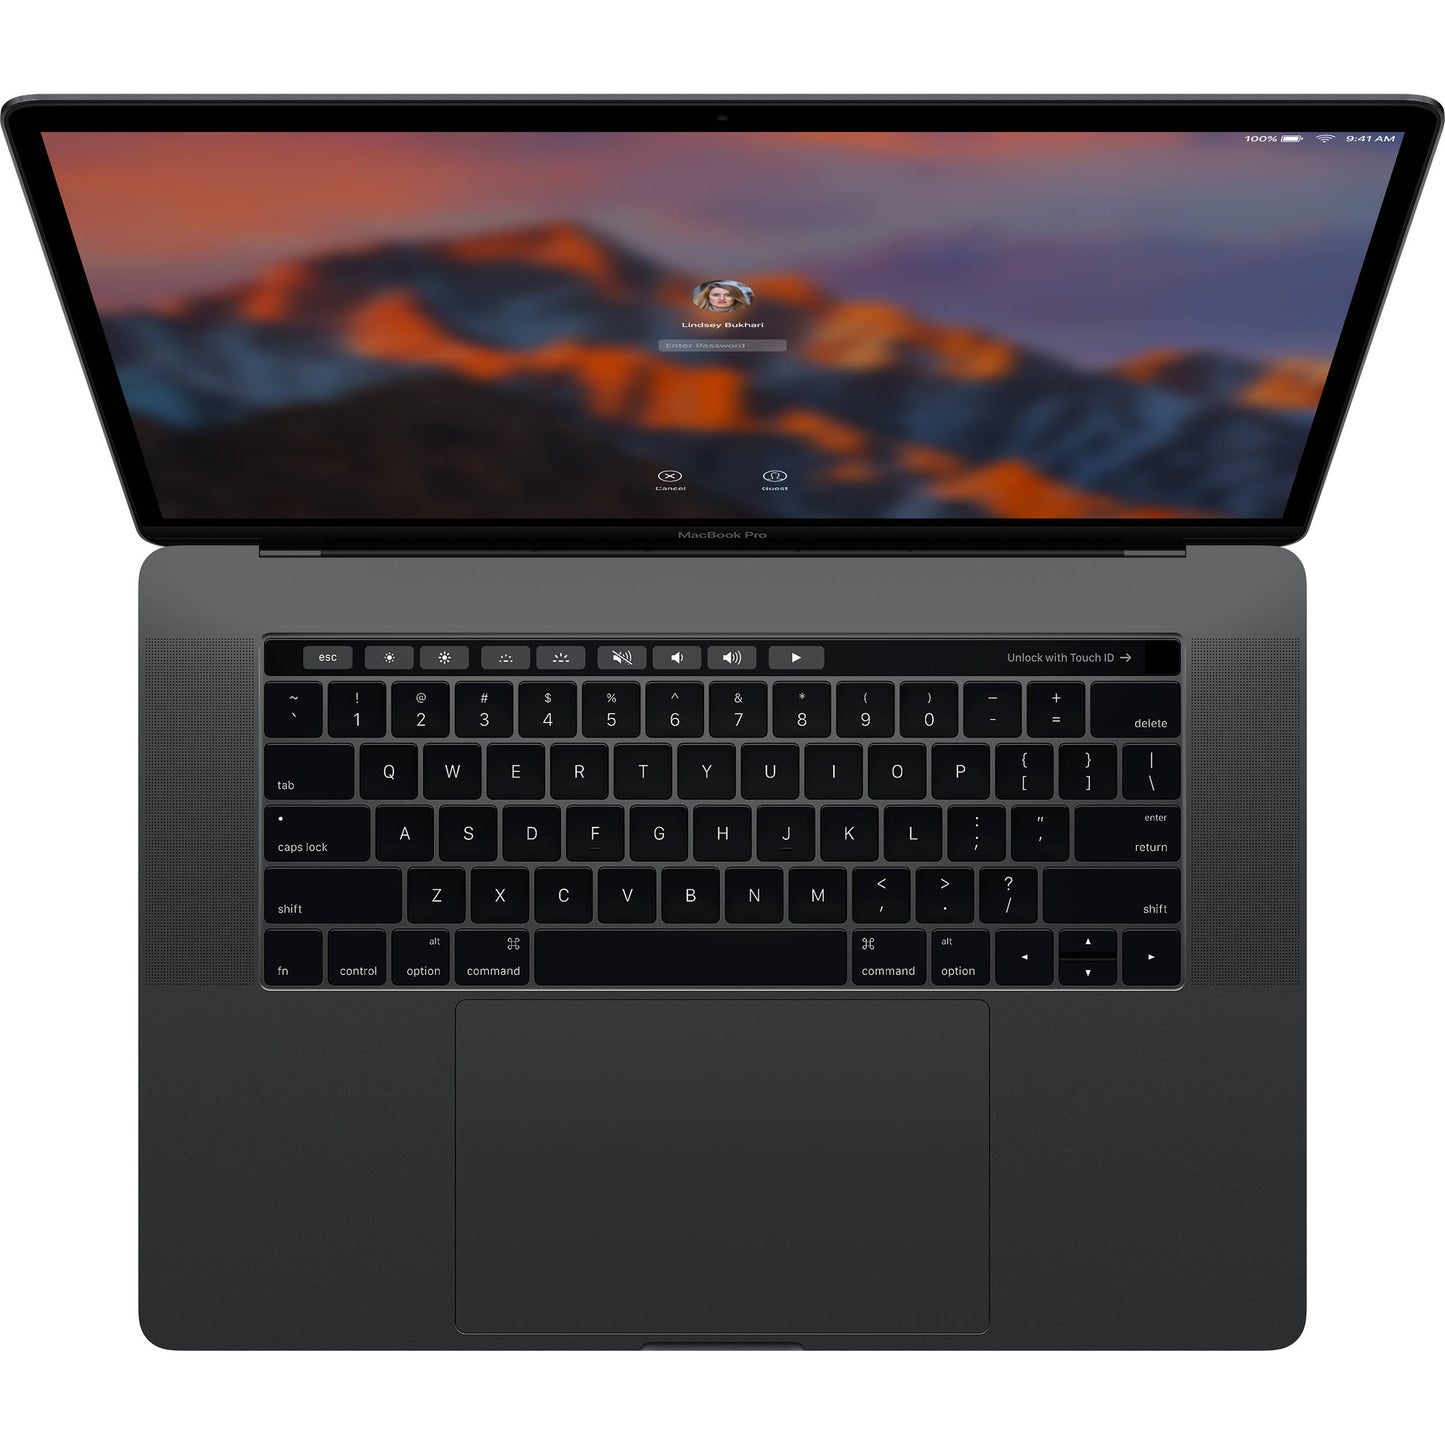 apple-2016-15.4-inch-macbook-pro-touchbar-a1707-silver-qci7 - 2.7ghz processor, 16gb ram, pro 455 - 2gb gpu-mlw82ll/a-2